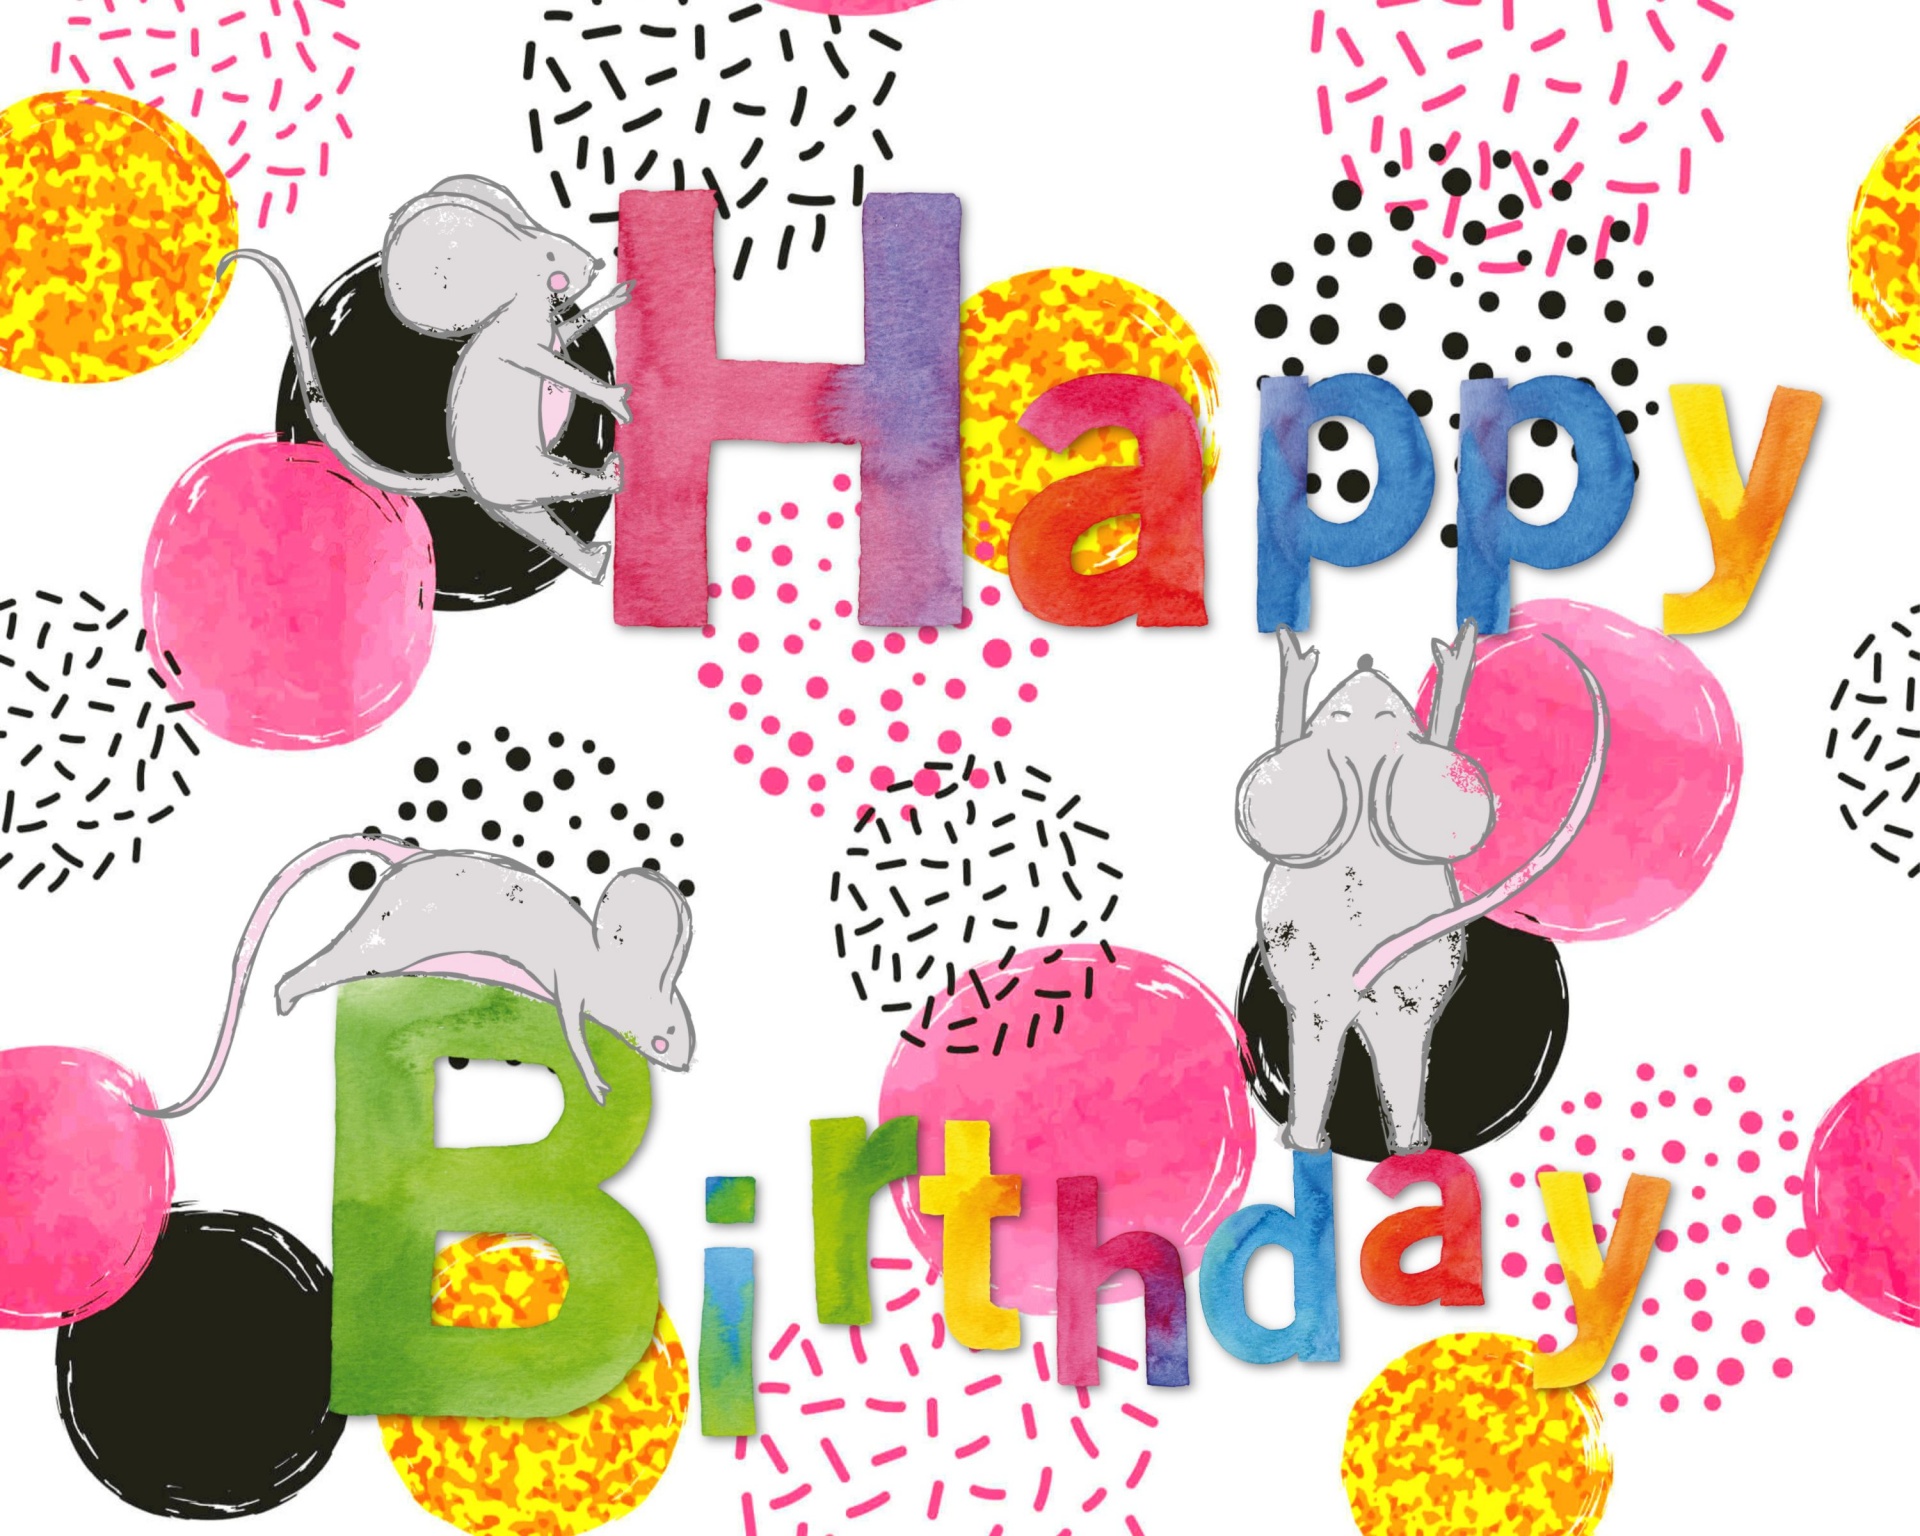 bright happy birthday card featuring cute mice